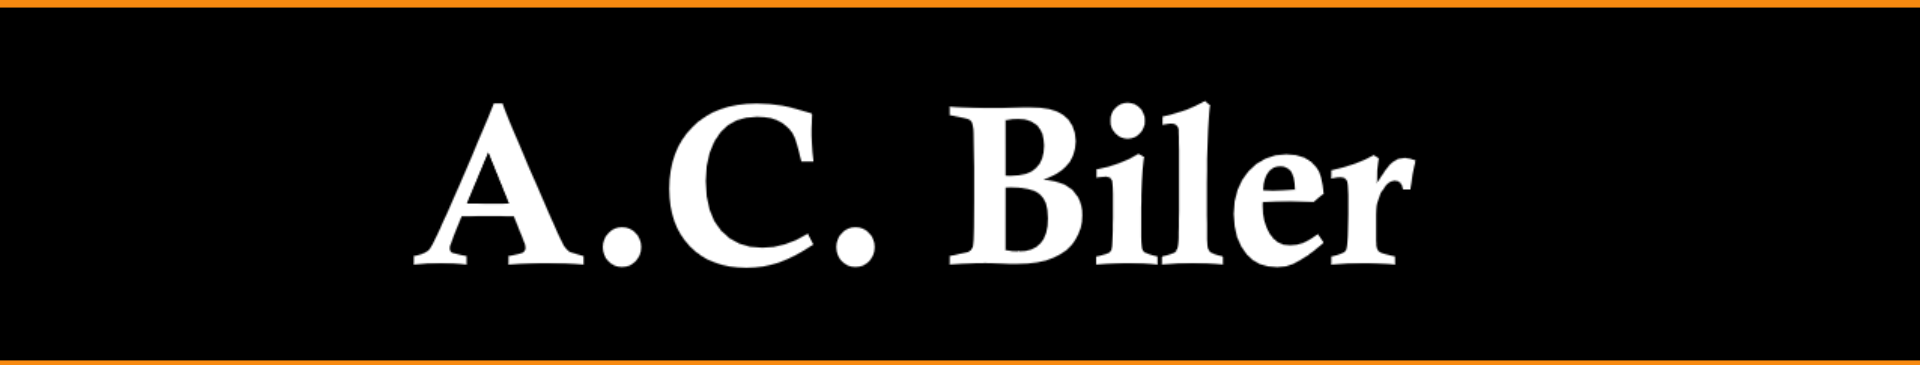 A.C Biler logo